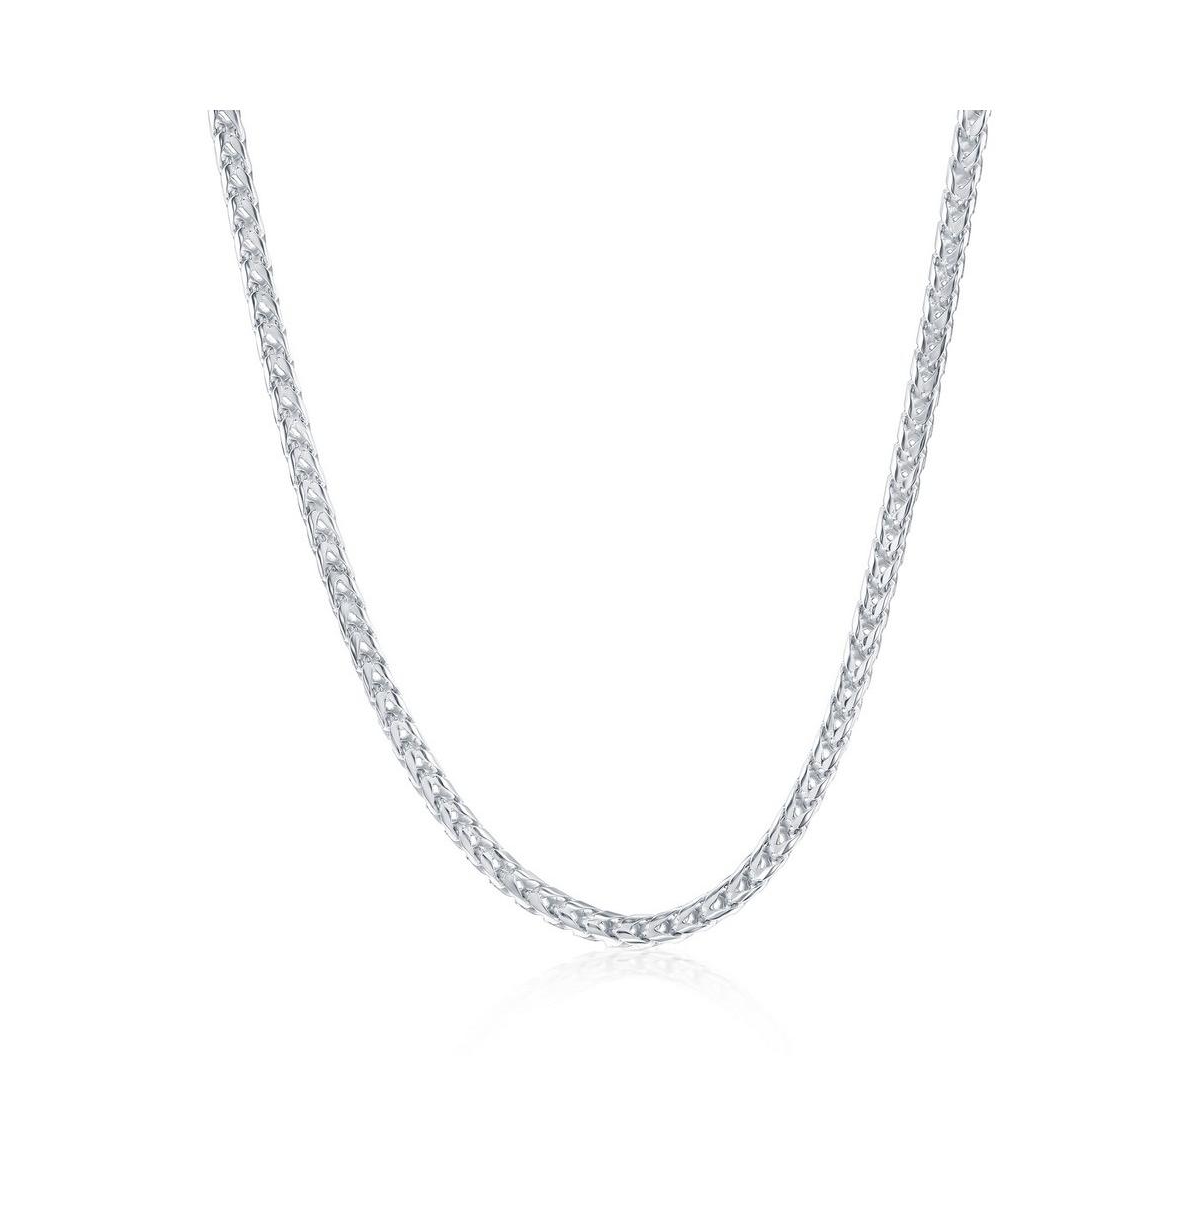 Diamond cut Franco Chain 3mm Sterling Silver 30" Necklace - Silver